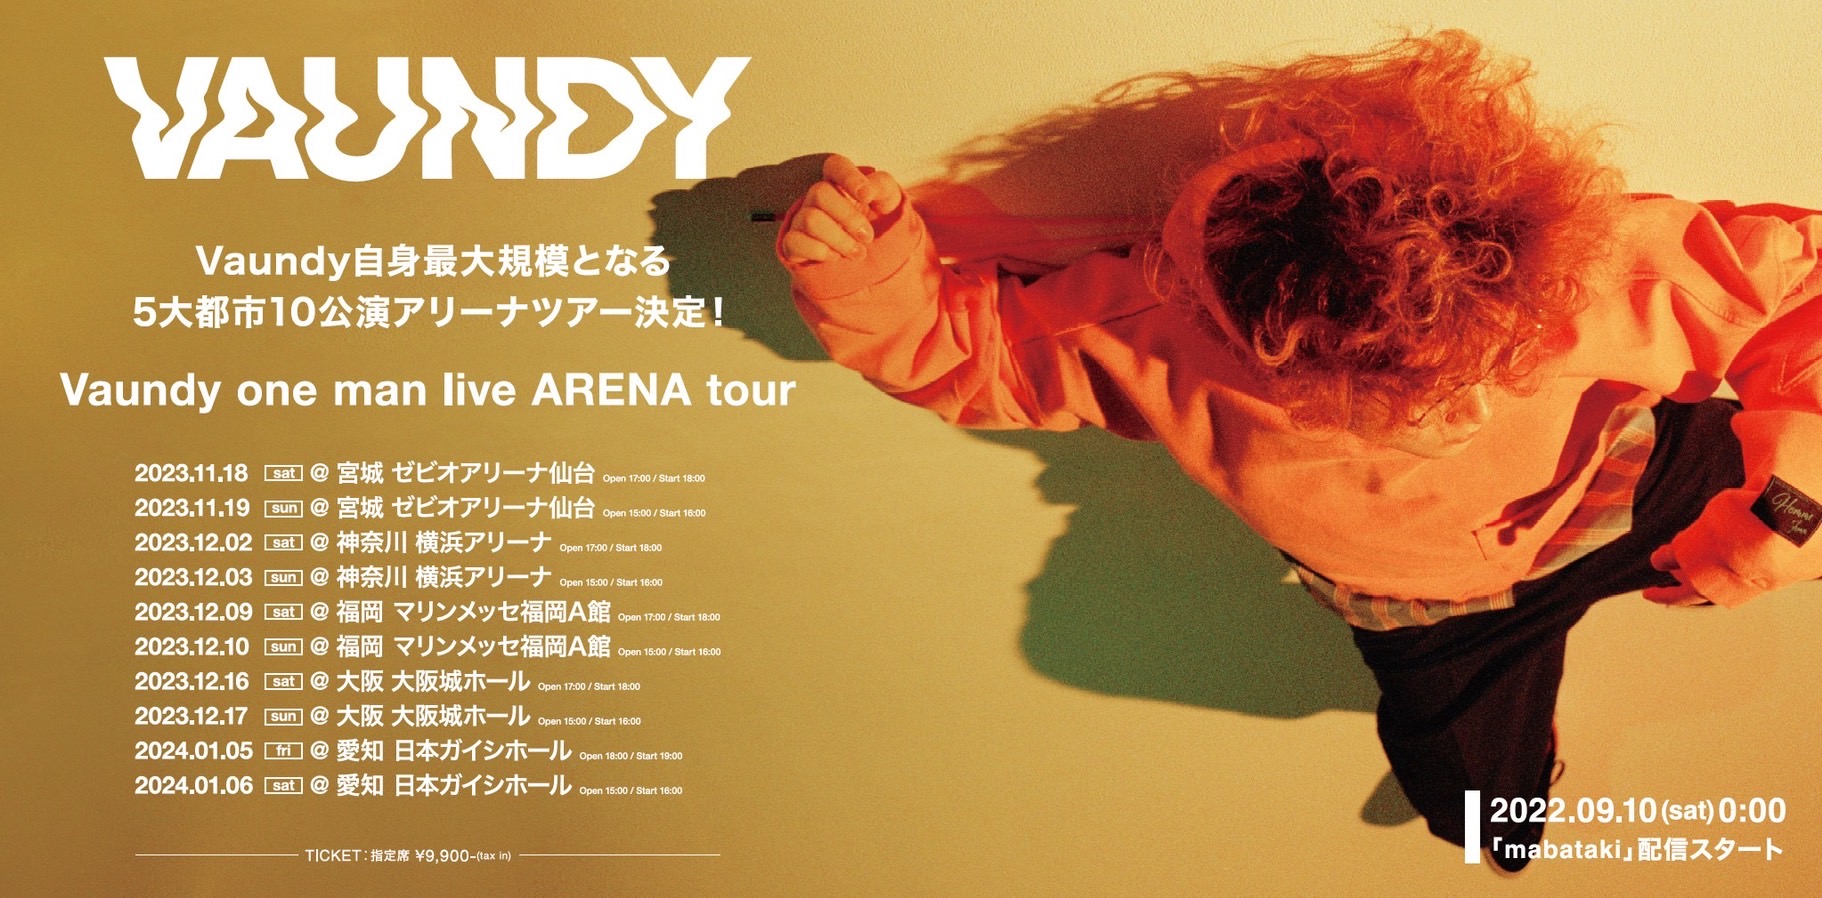 Vaundy one man live ARENA tour チケット先行受付情報